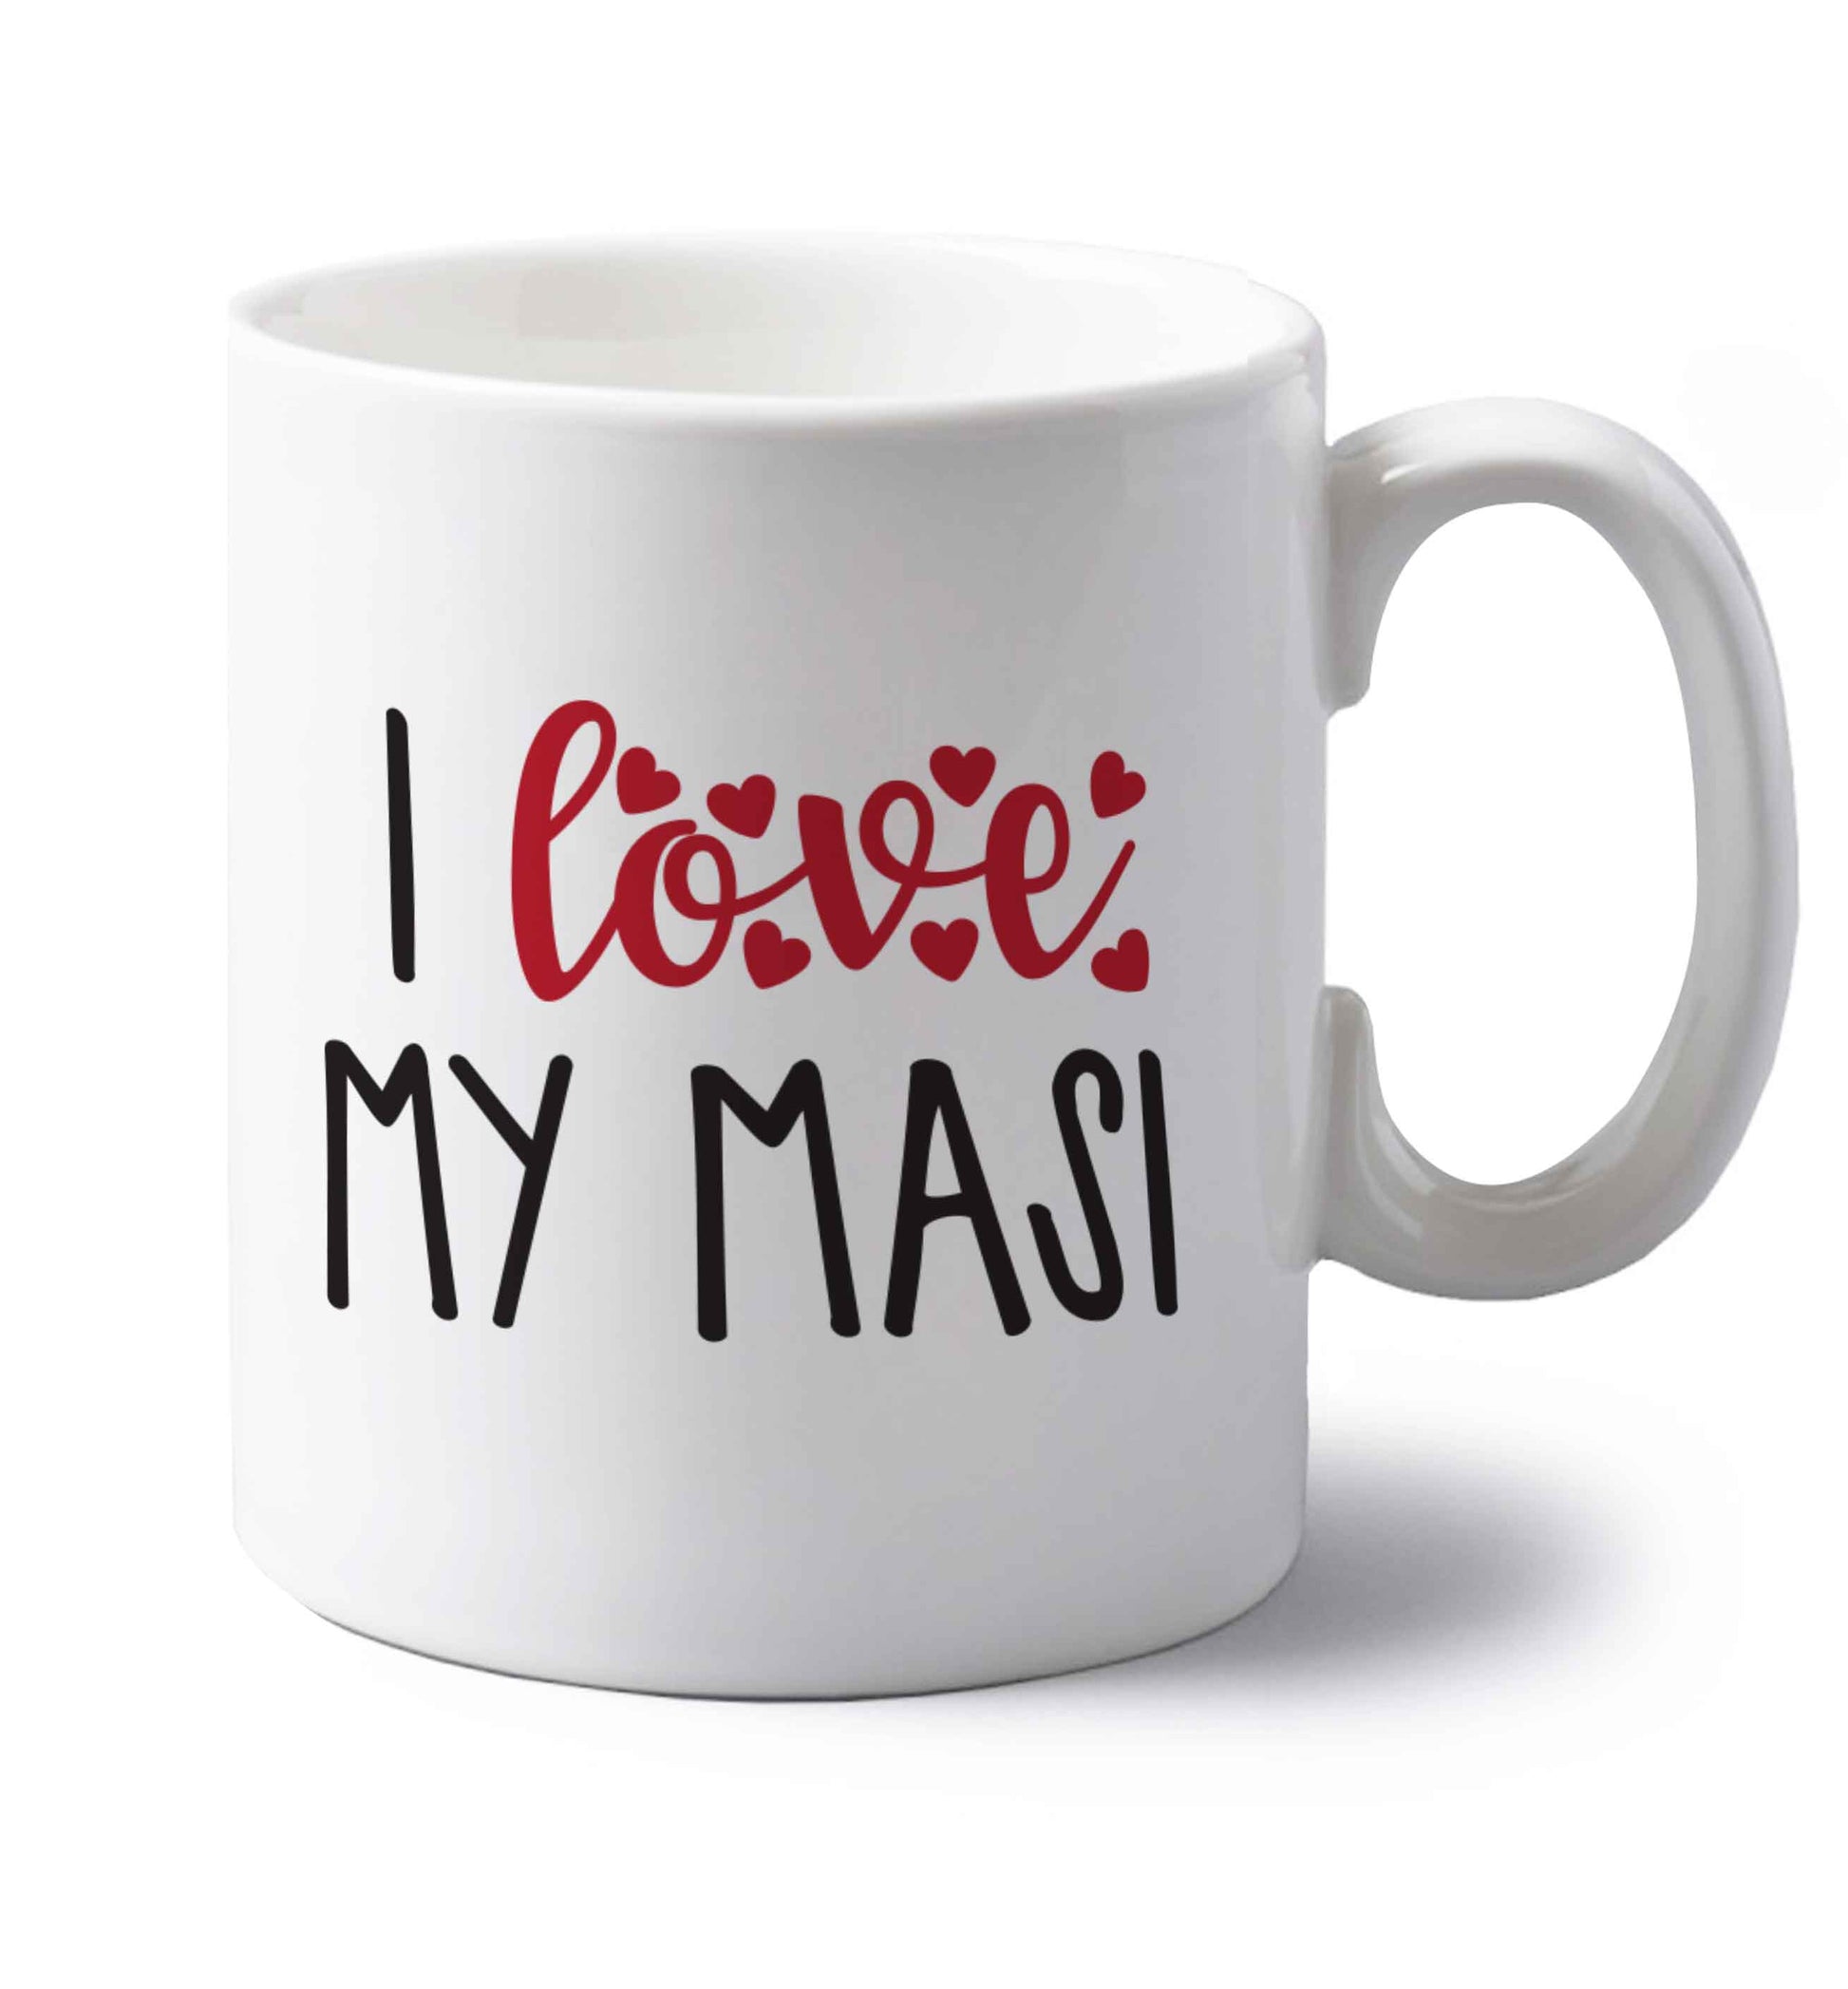 I love my masi left handed white ceramic mug 